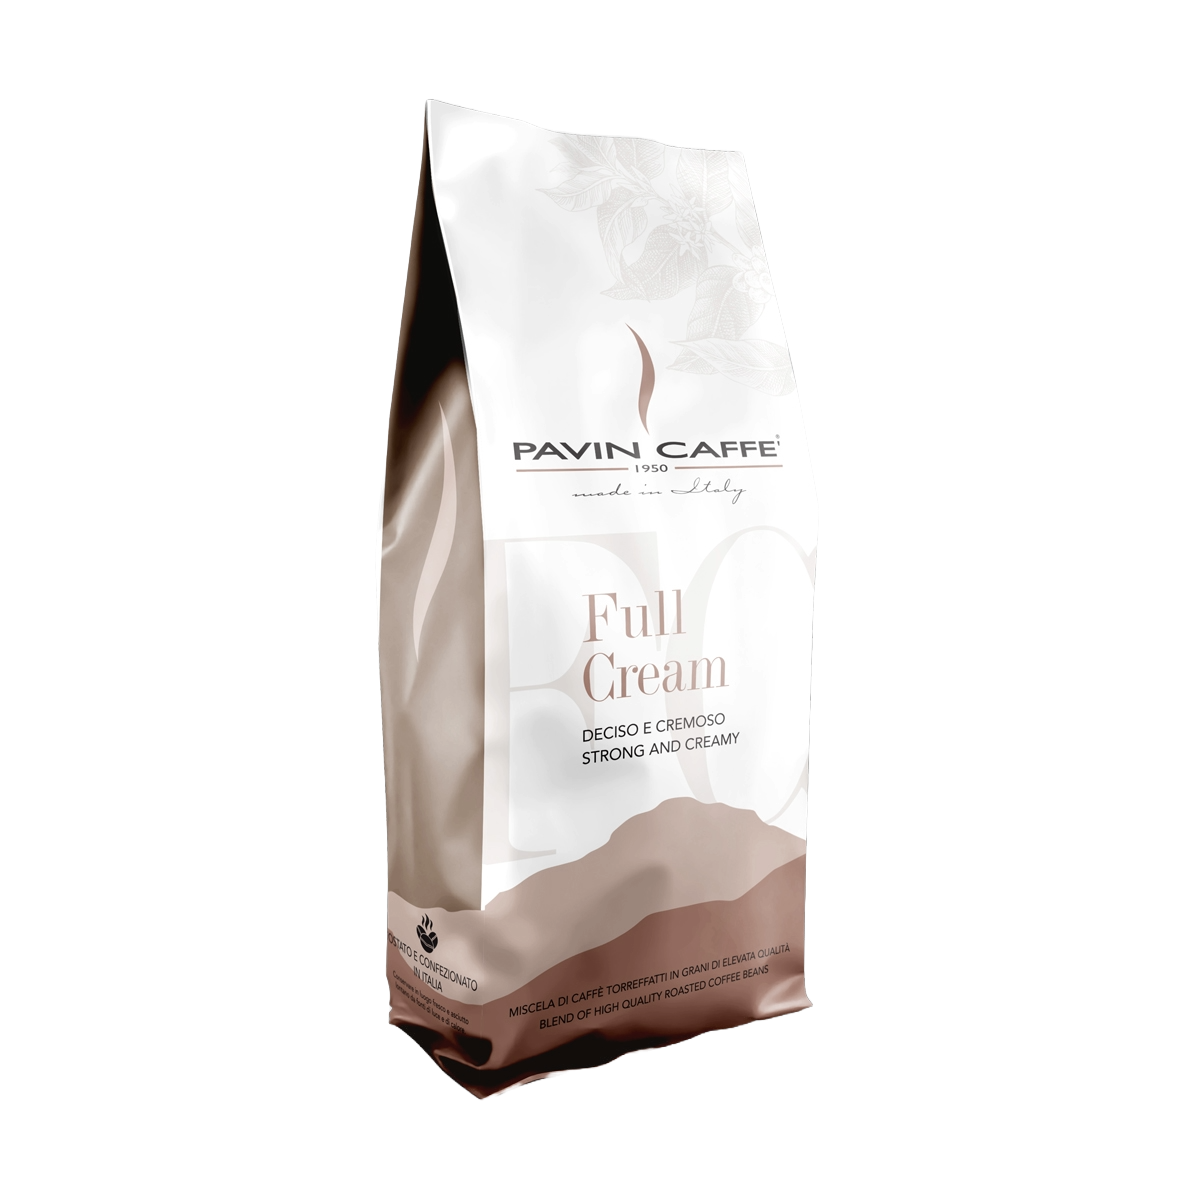 PAVIN CAFFE - FULL CREAM - Coffee Beans